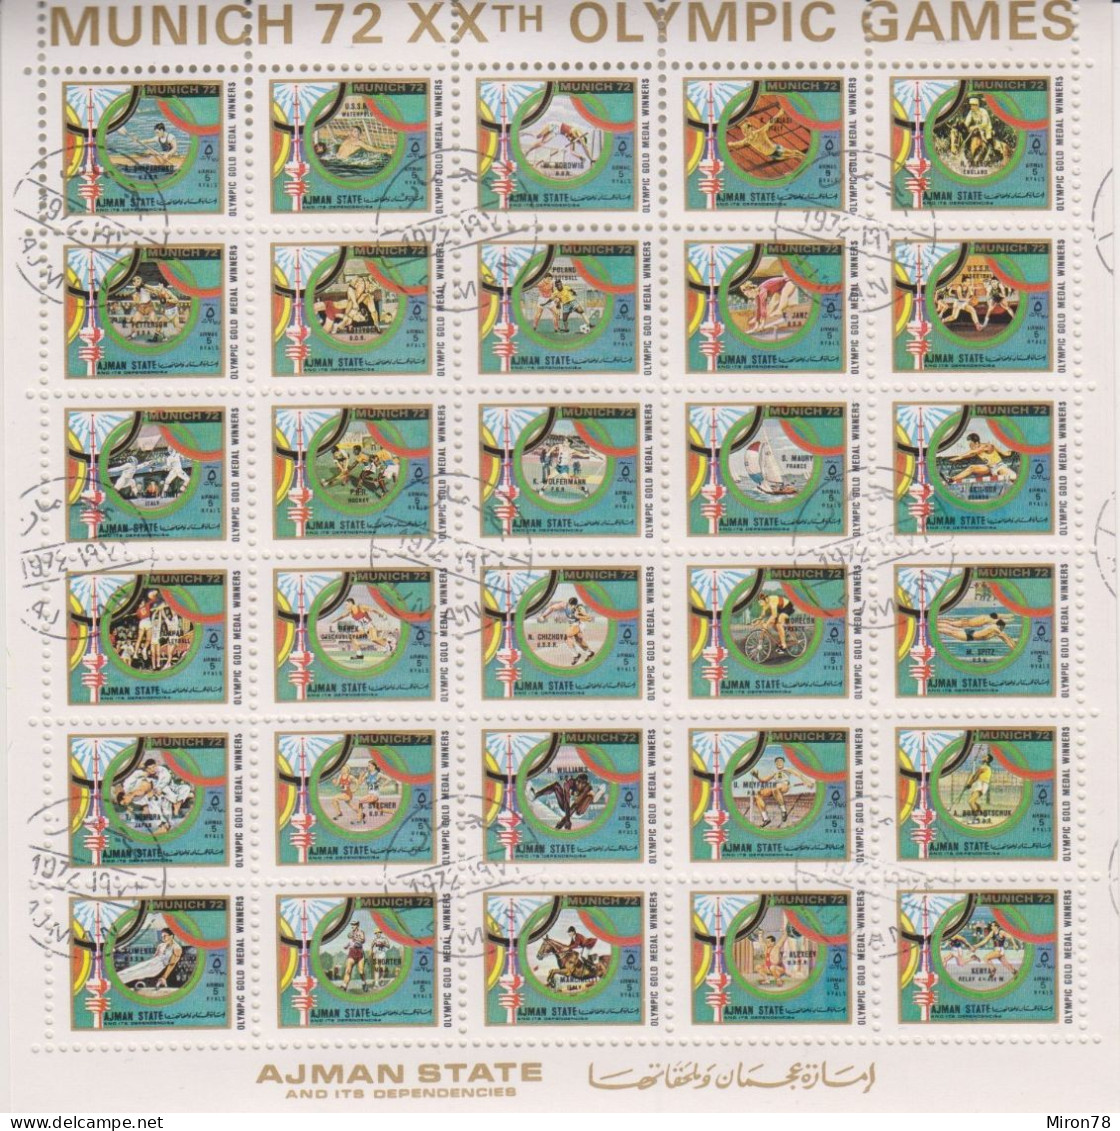 AJMAN OLYMPIC GAMES MUNICH 1972 #1605-34 SH USED (MNH-MICHEL 150 EURO!!!) - Non Classificati